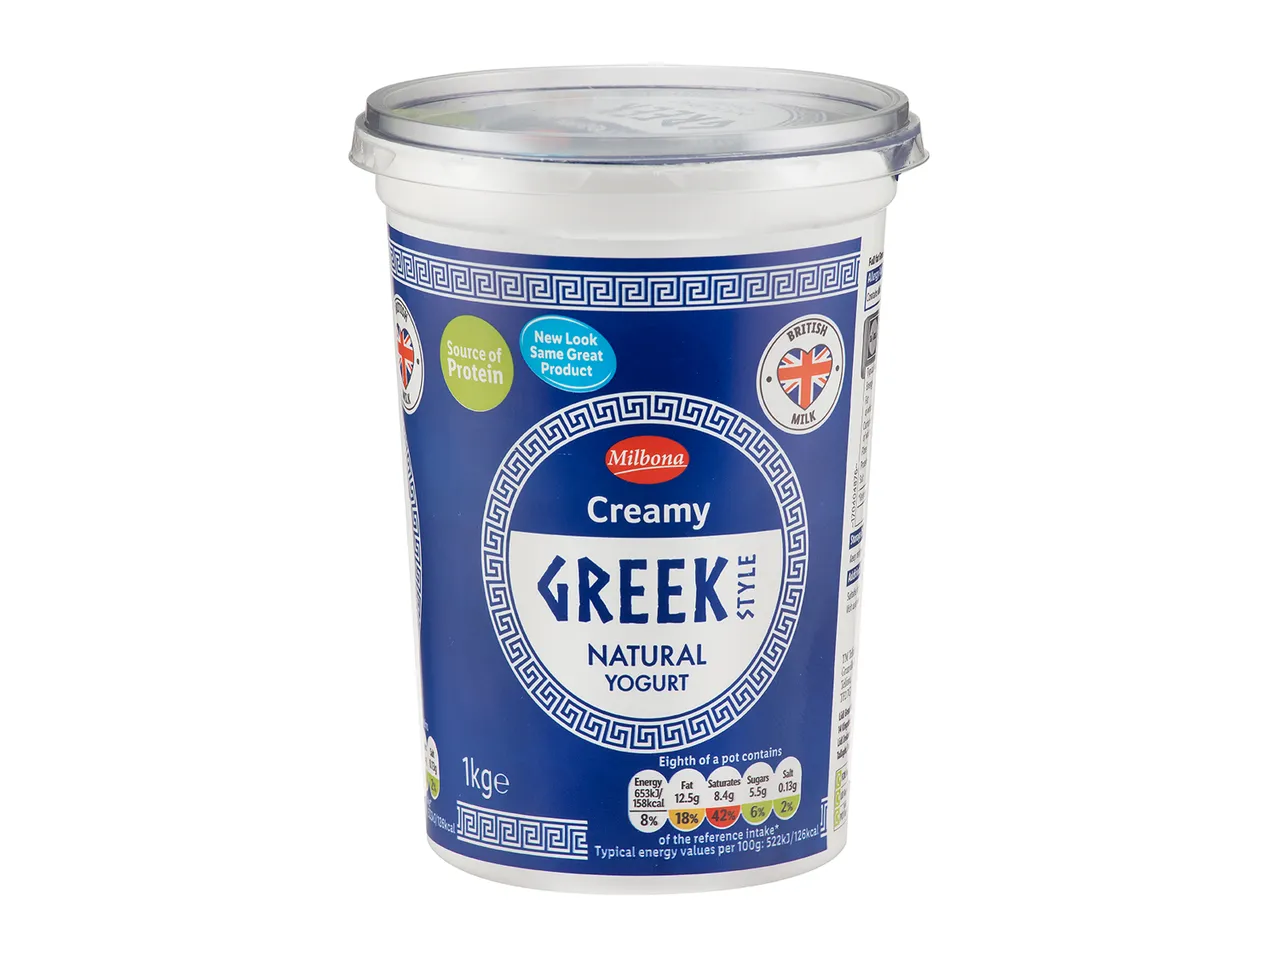 Go to full screen view: Milbona Greek-Style Natural Yogurt - Image 1